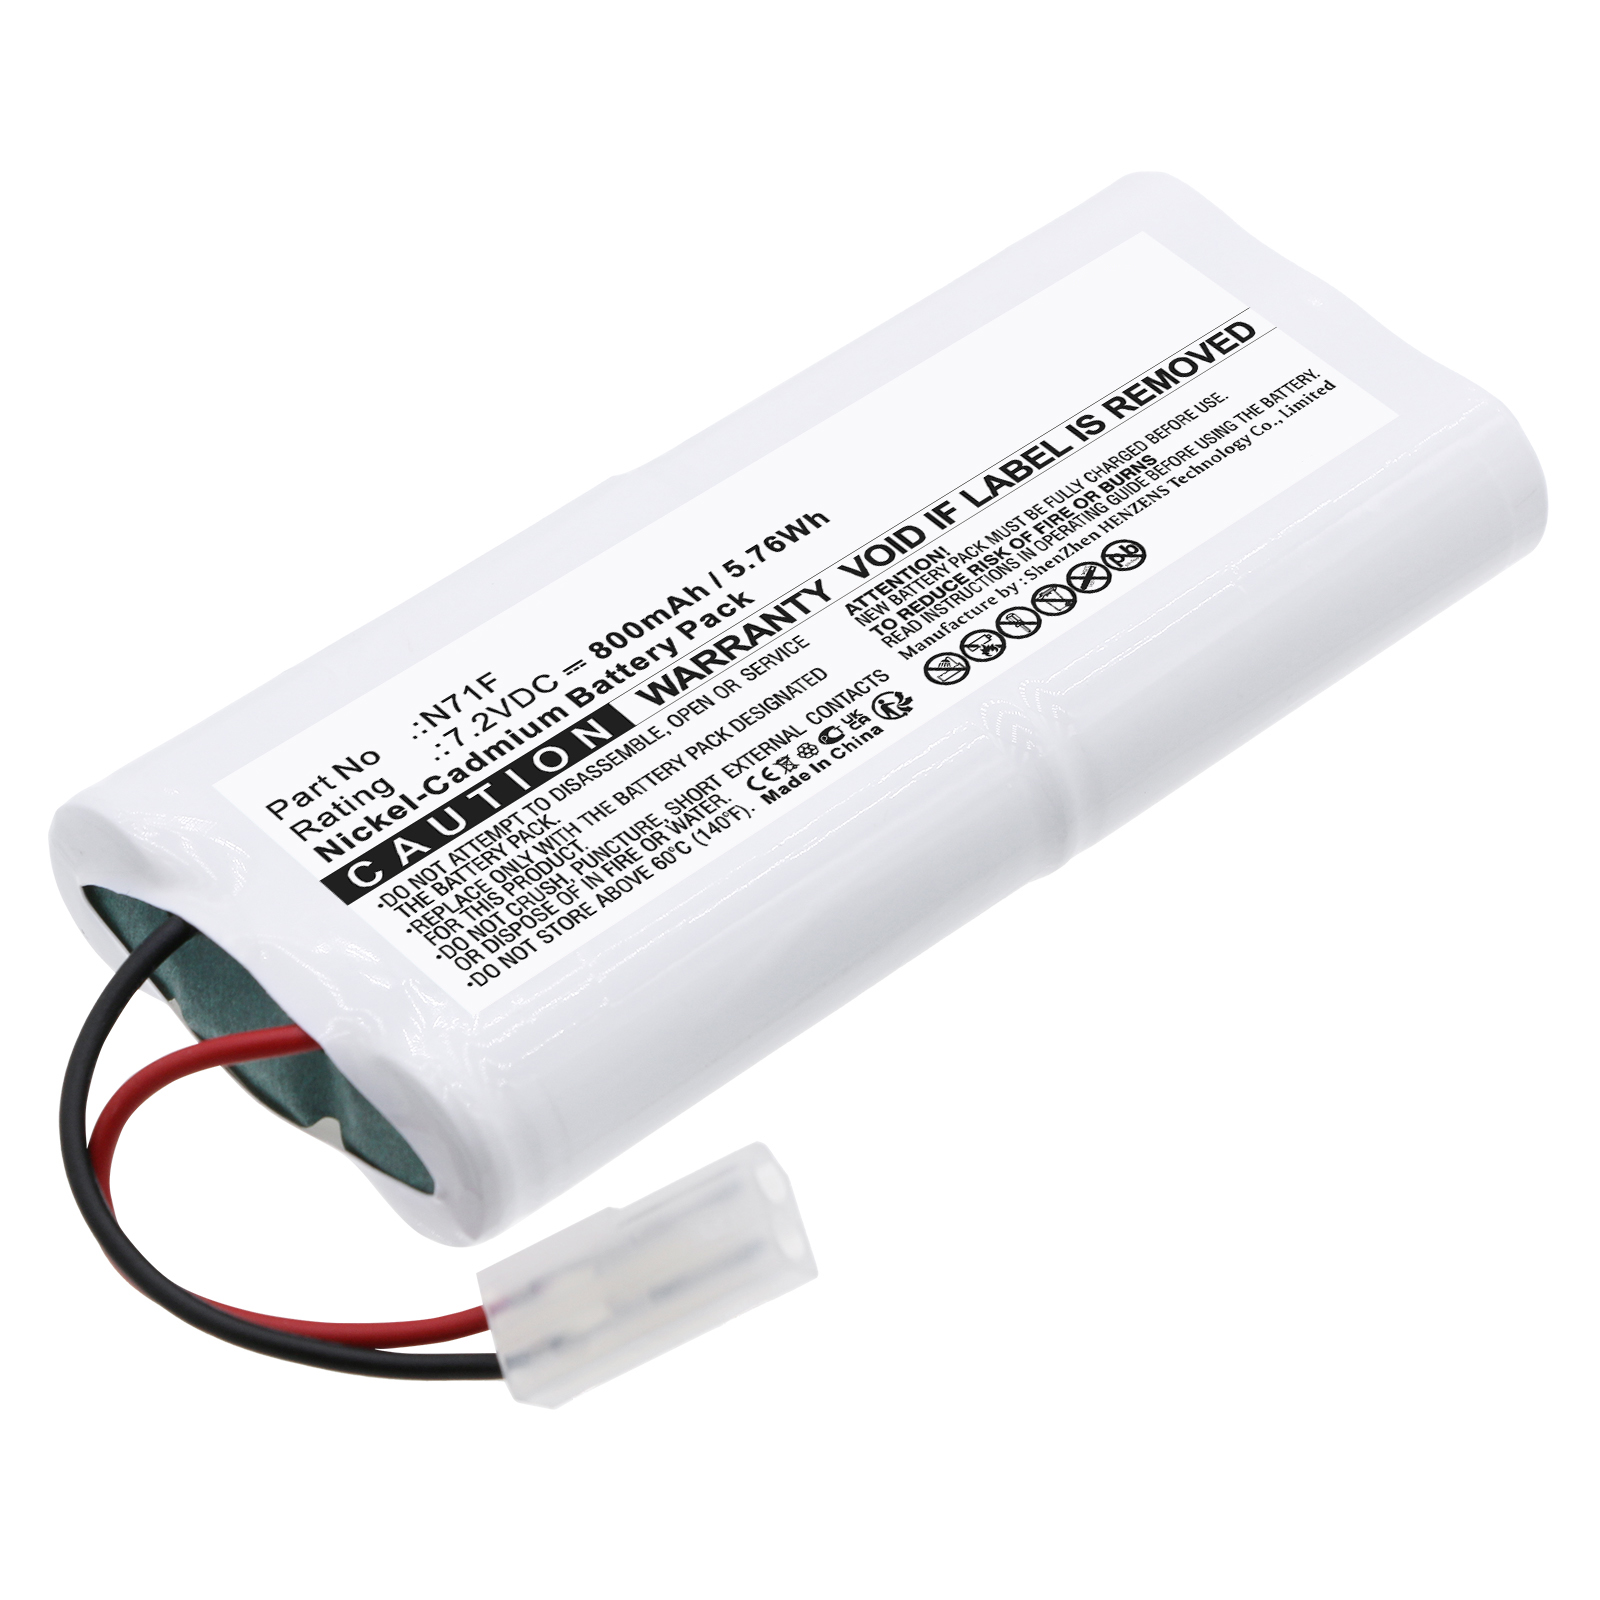 Batteries for Big BeamEmergency Lighting